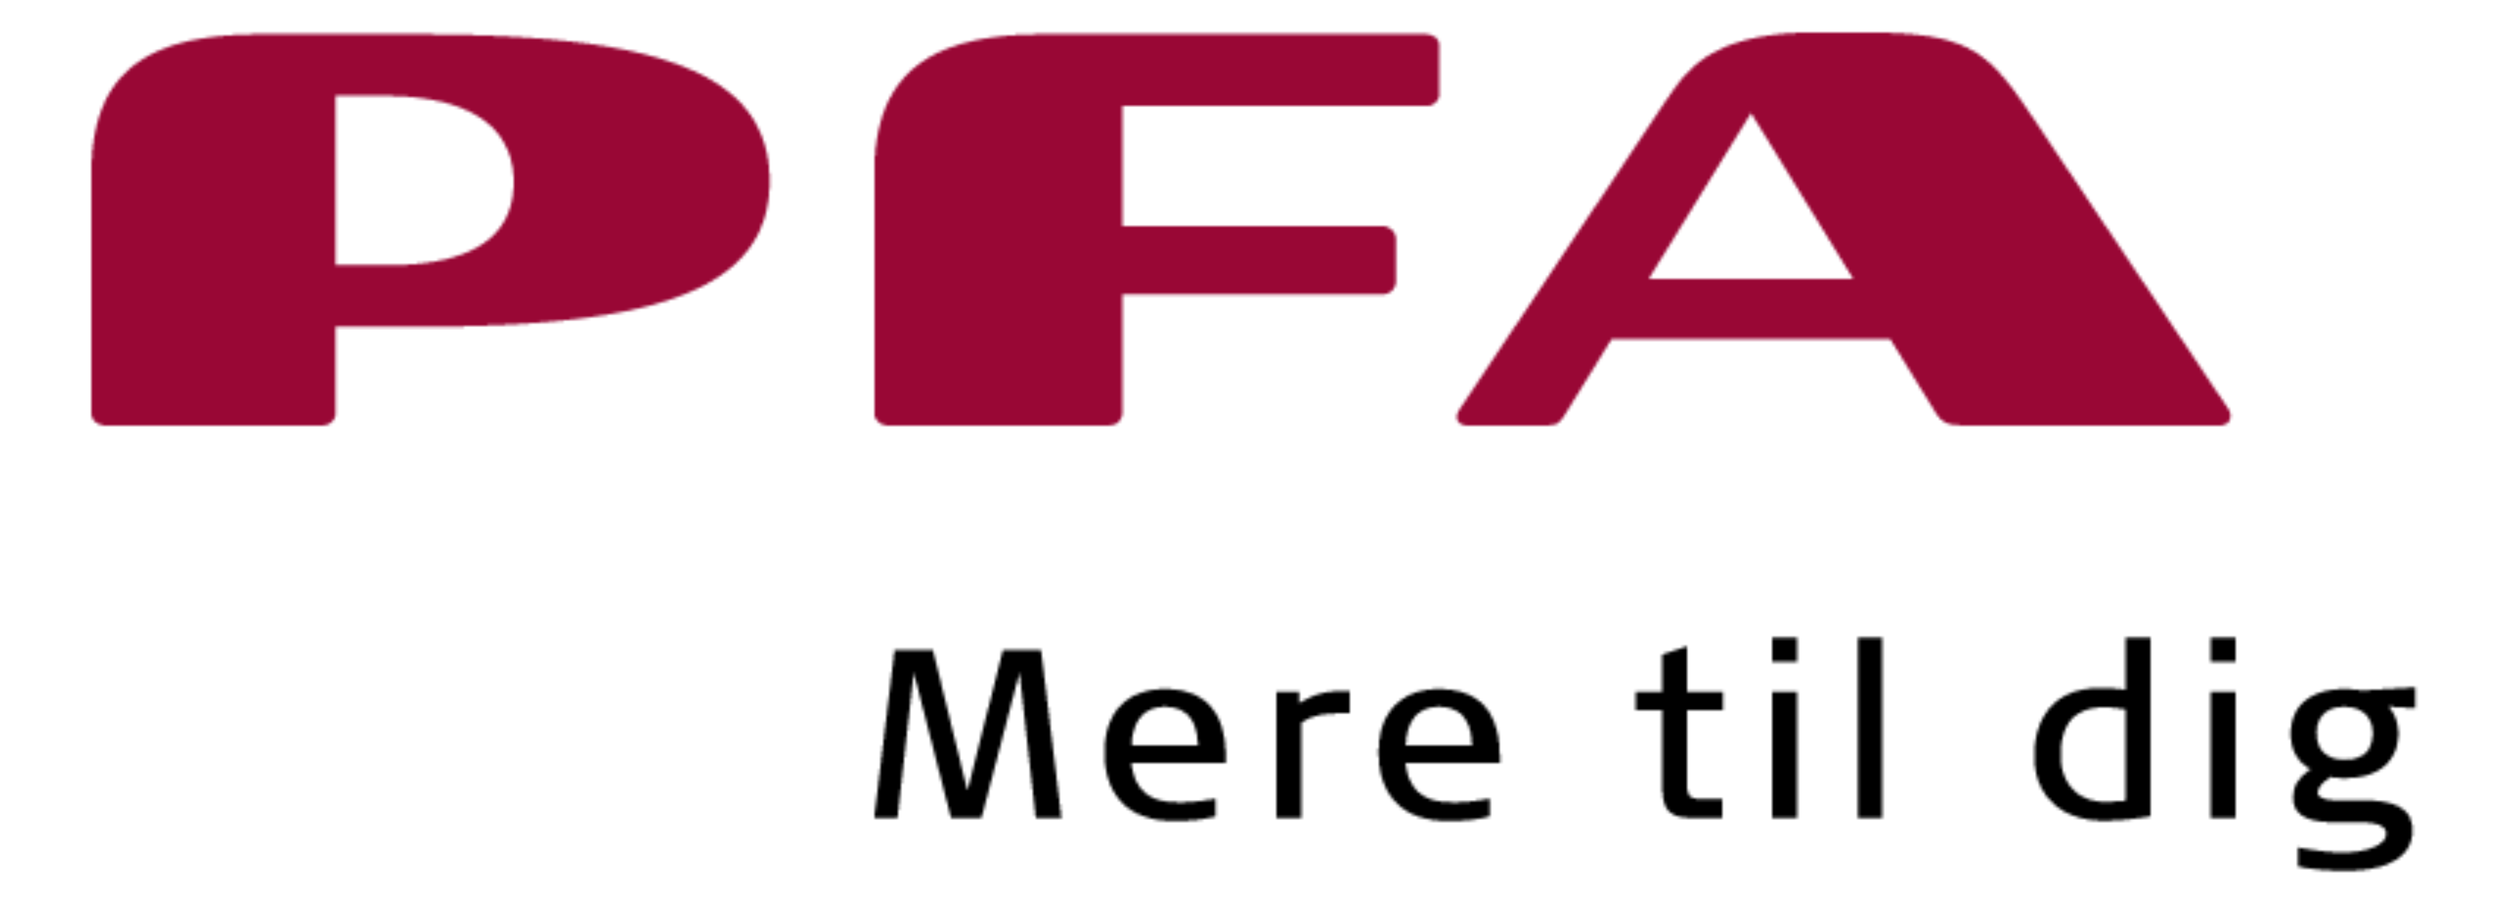 pfa-logo